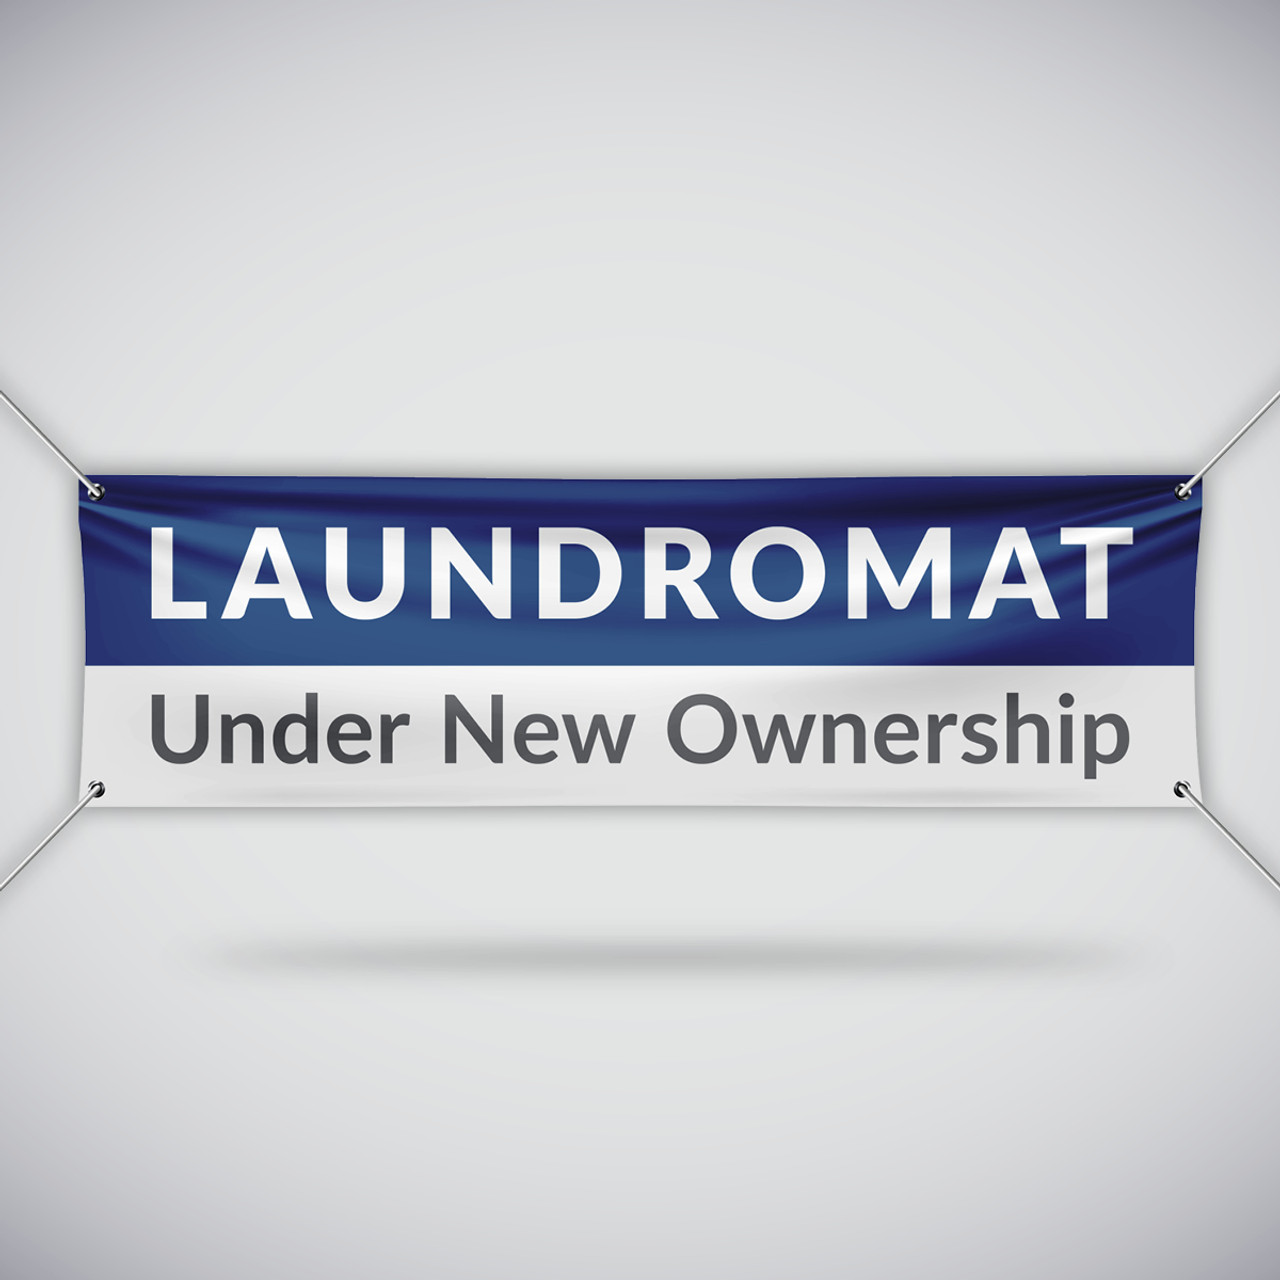 Laundromat Under New Ownership Banner - Blue